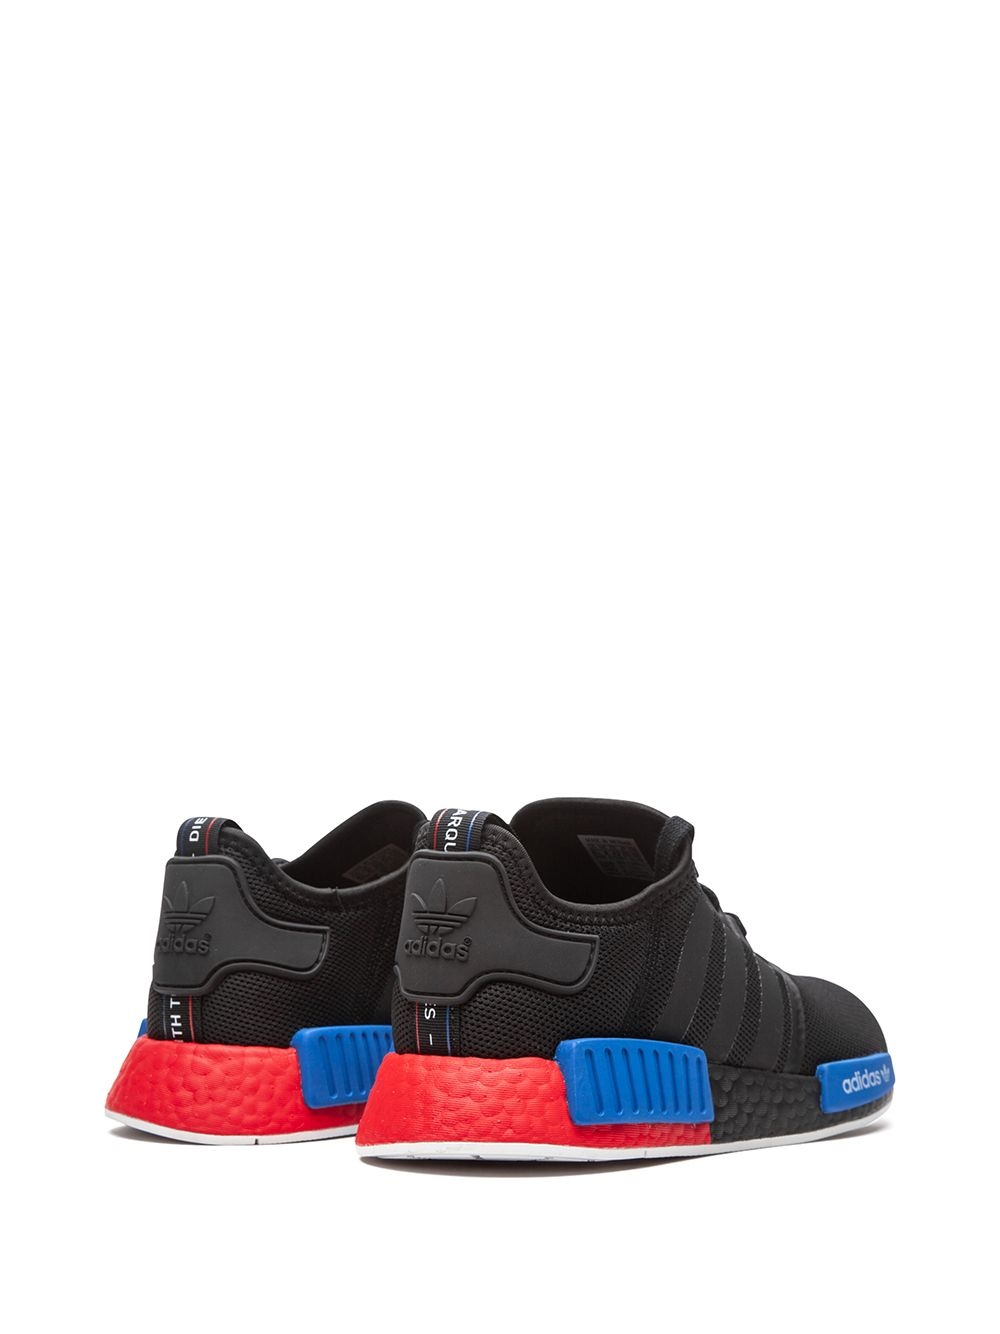 NMD_R1 "Black/Red/Blue" sneakers - 3